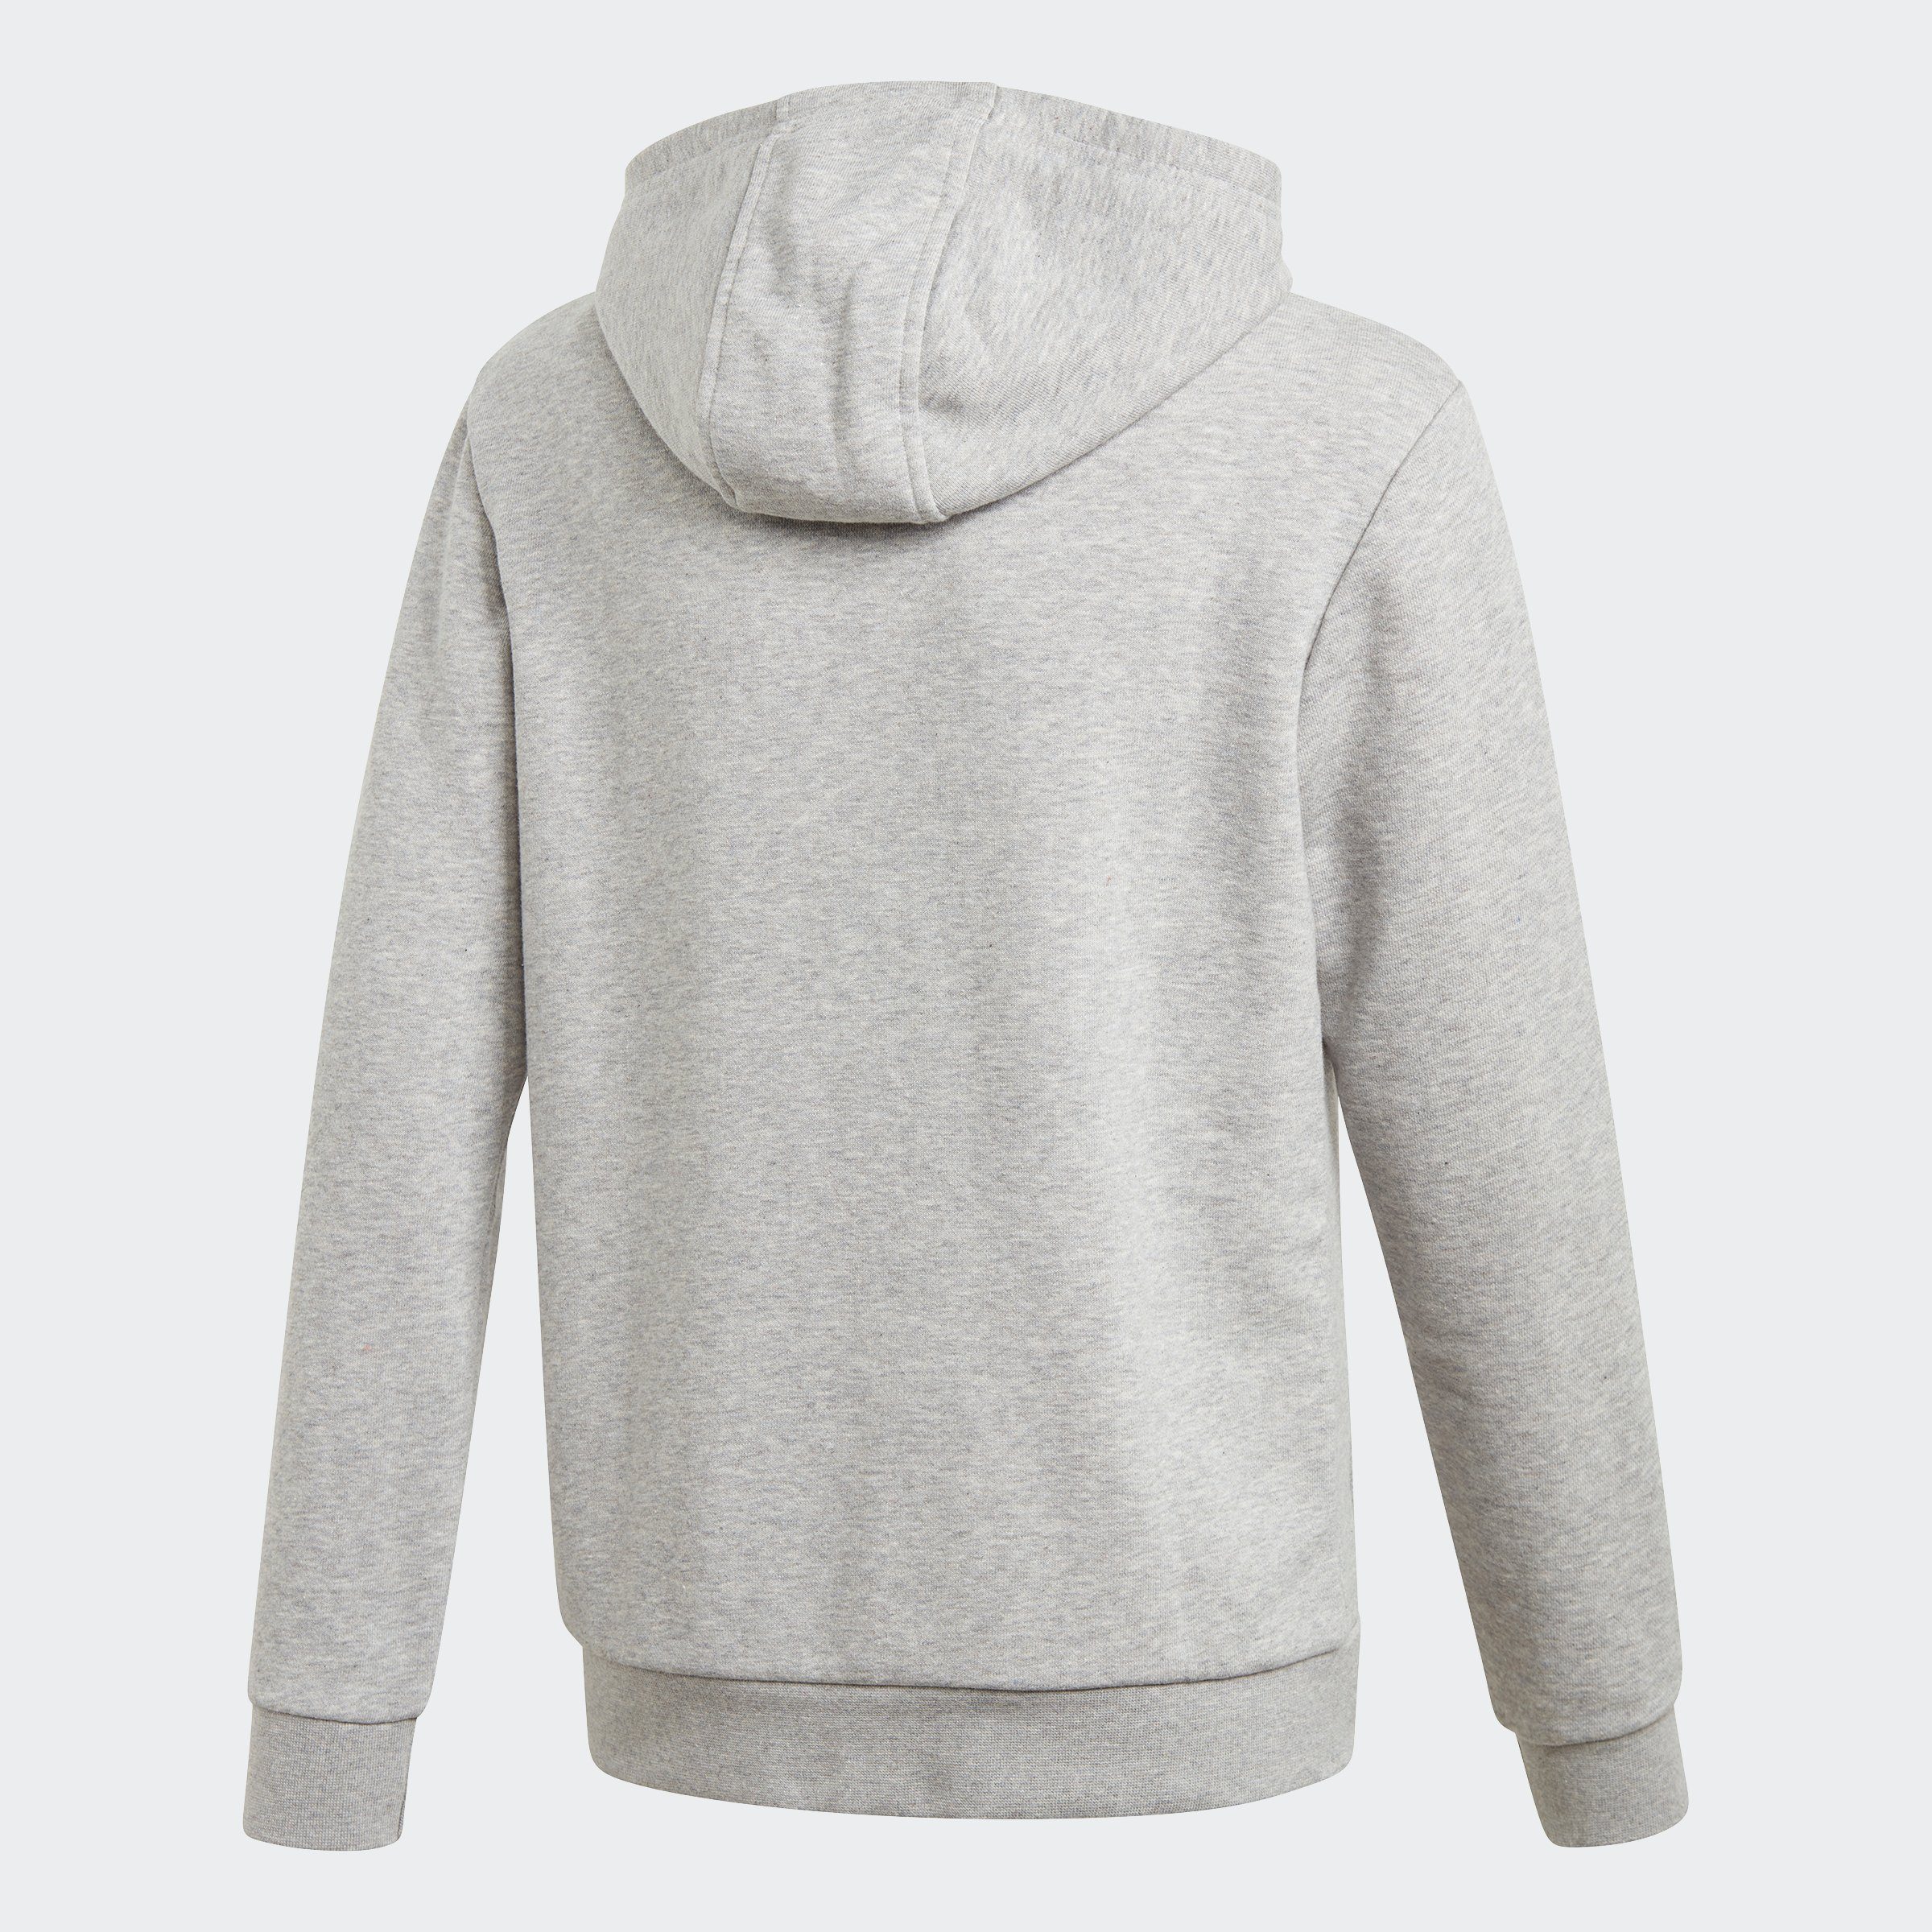 Sweatshirt HOODIE White Heather / Medium TREFOIL Originals adidas Grey